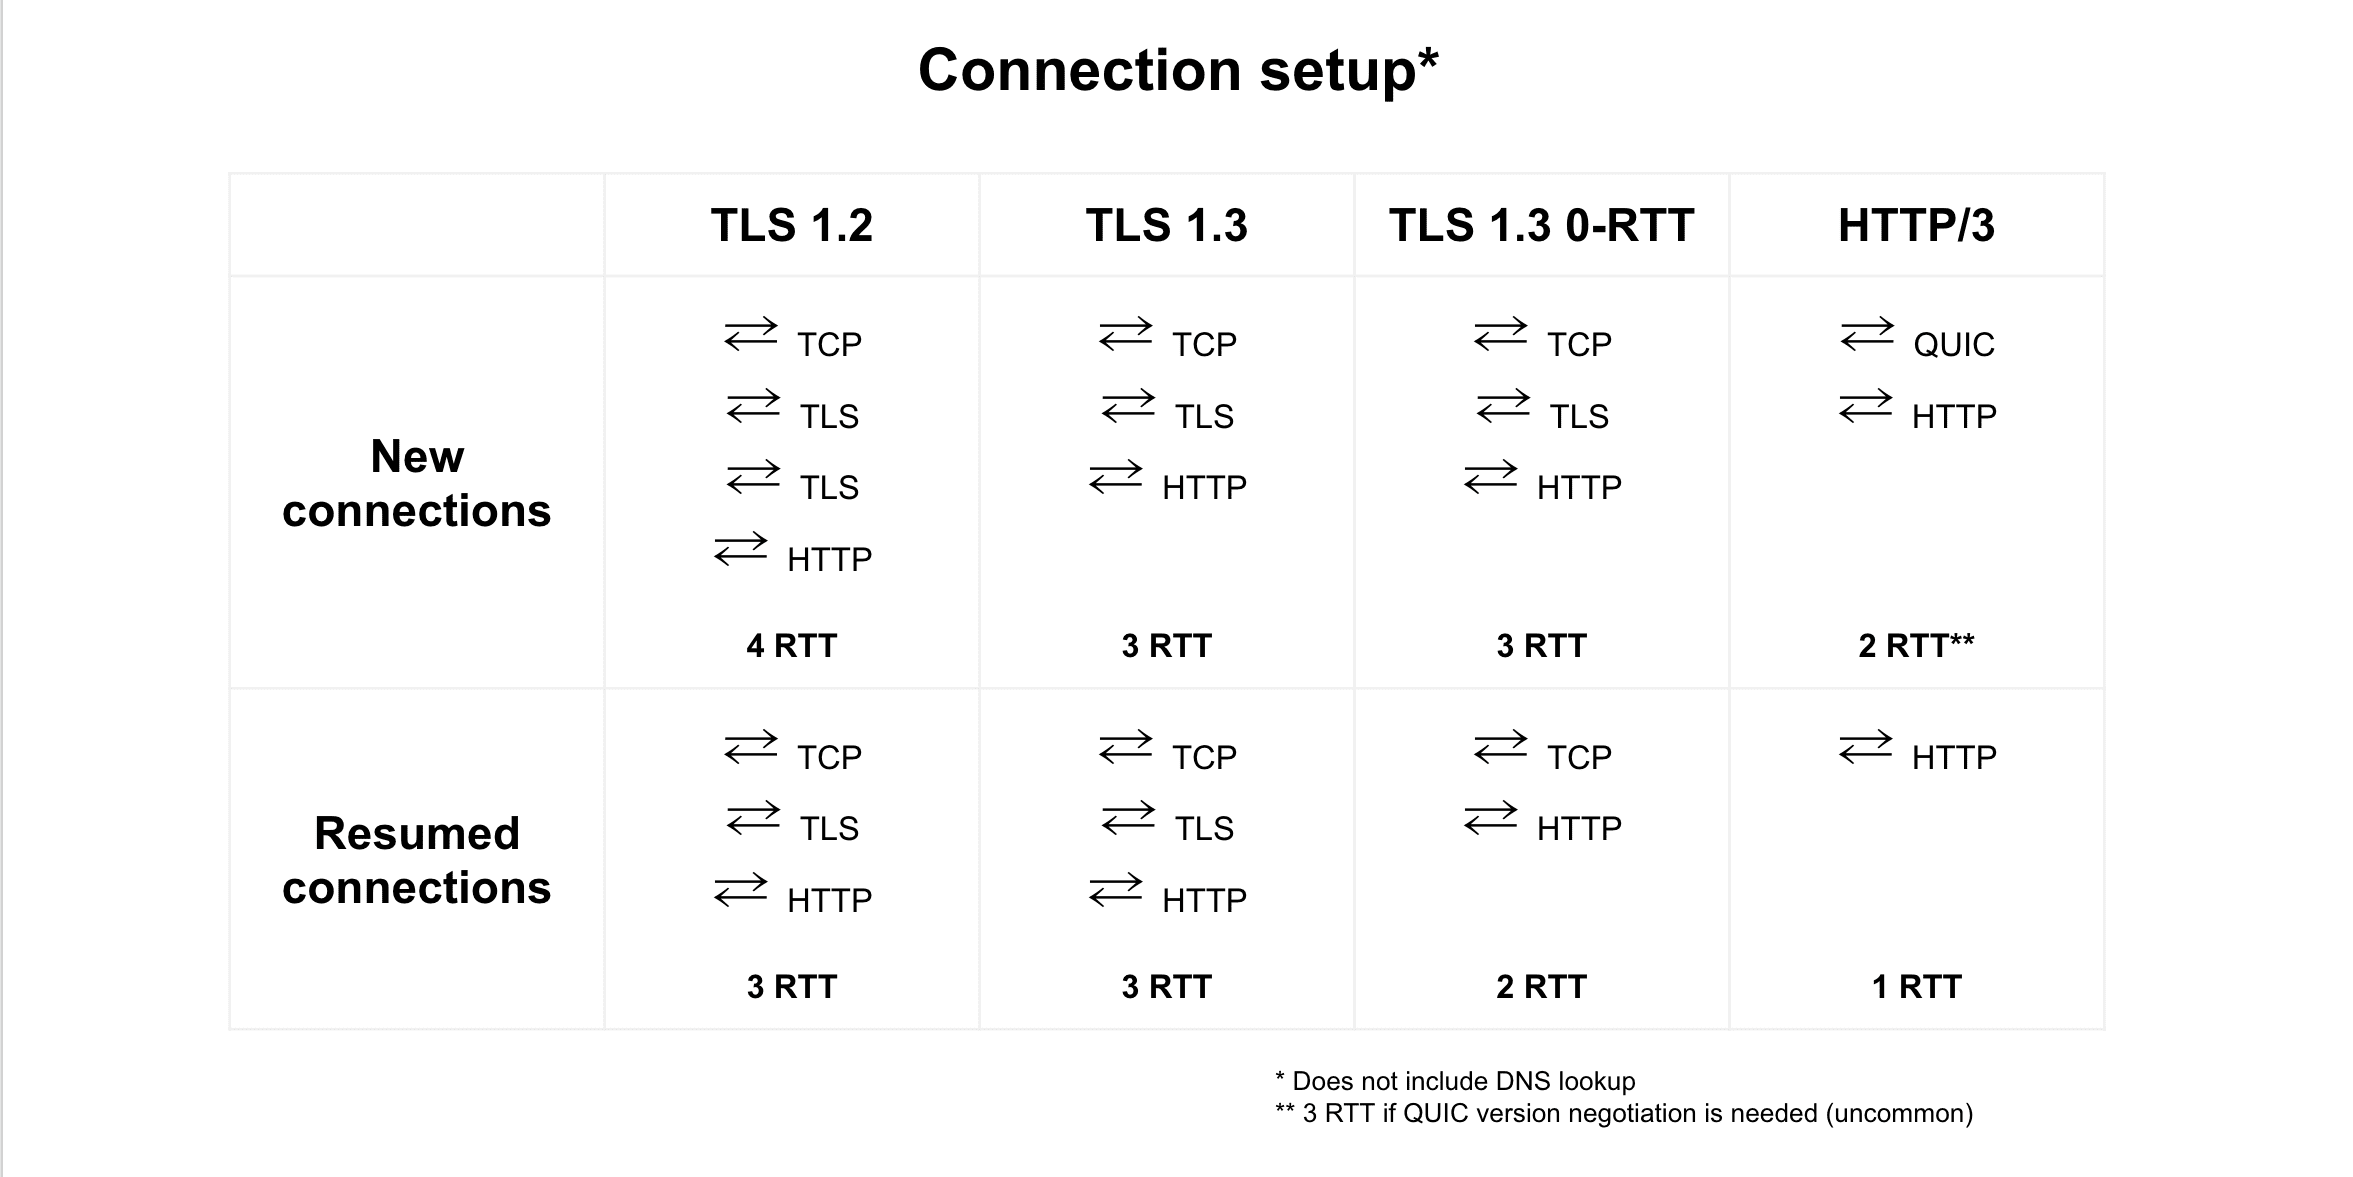 Comparison of connection resumption between TLS 1.2, TLS 1.3, TLS 1.3 0-RTT, and HTTP/3